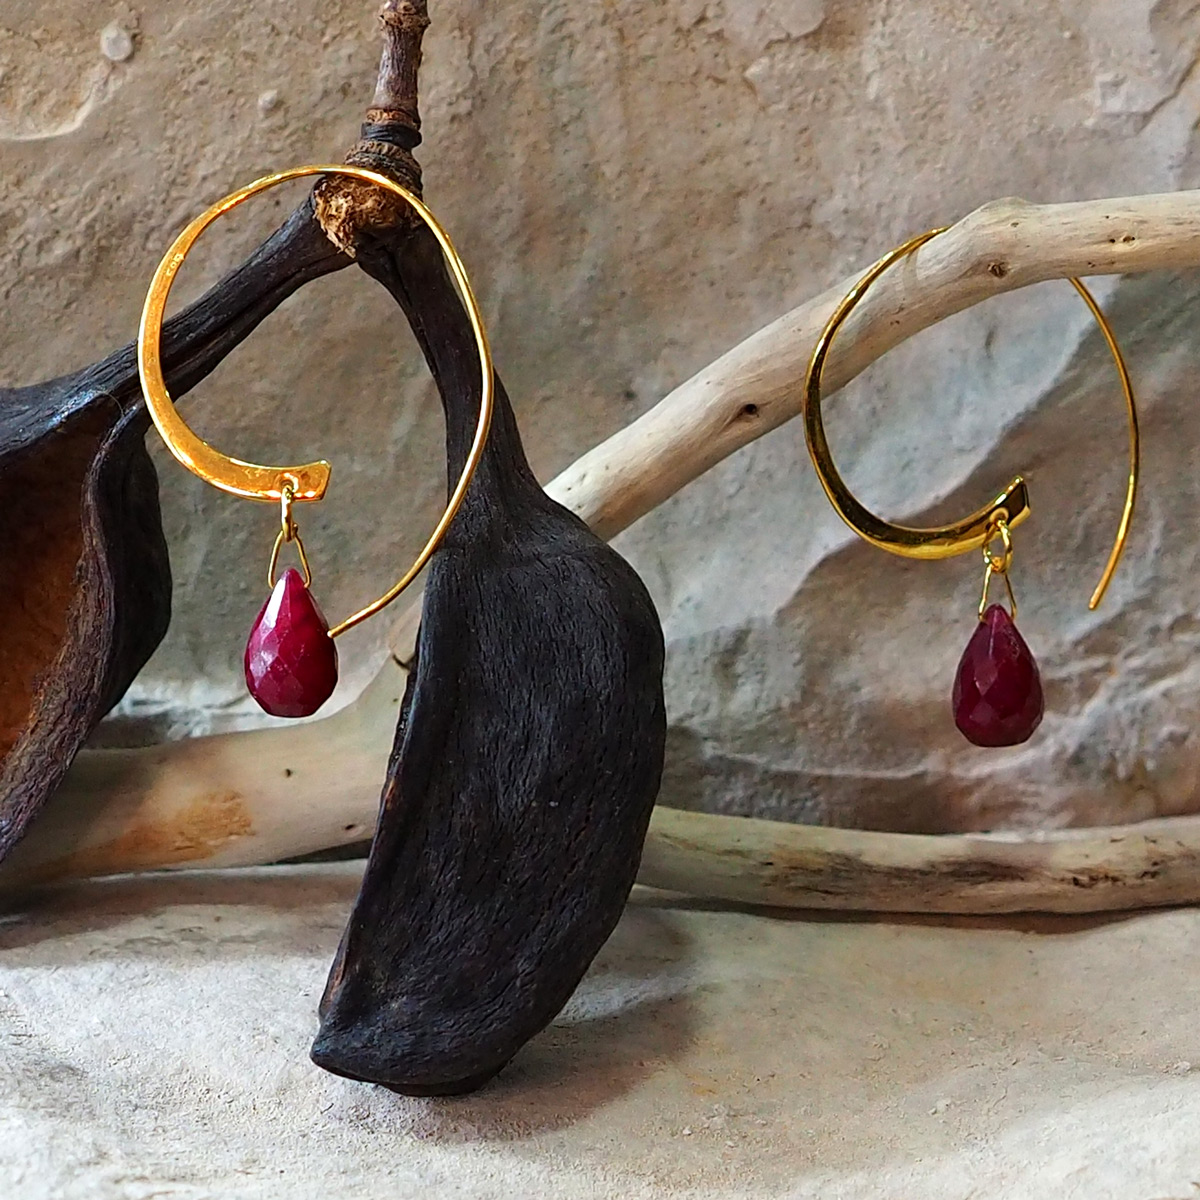 Dangle Ruby Earrings, Gemstone Beaded Hoop Earrings With Tiny Red Stones,  Gold Filled Earrings With Birthstone, Geometric Statement Earrings - Etsy |  Etsy earrings, Geometric statement earrings, Gemstone earrings dangle